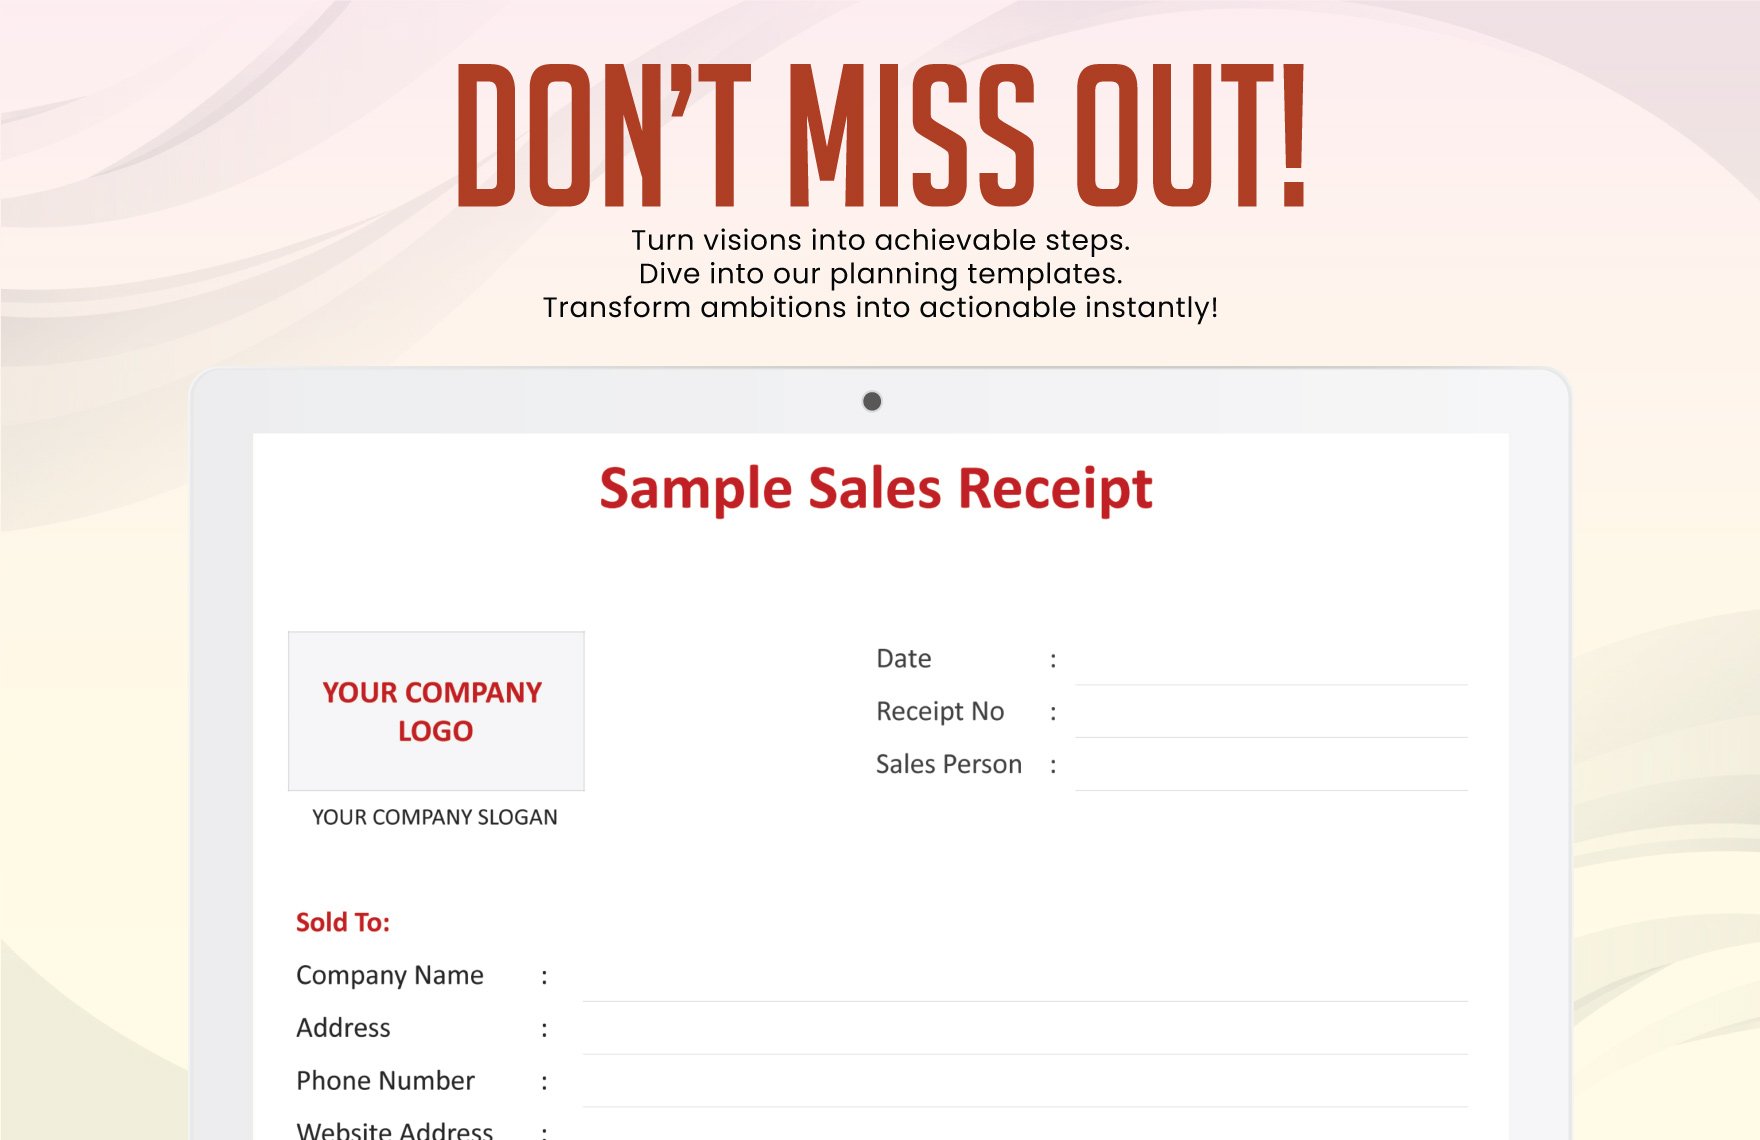 Sample Sales Receipt Template